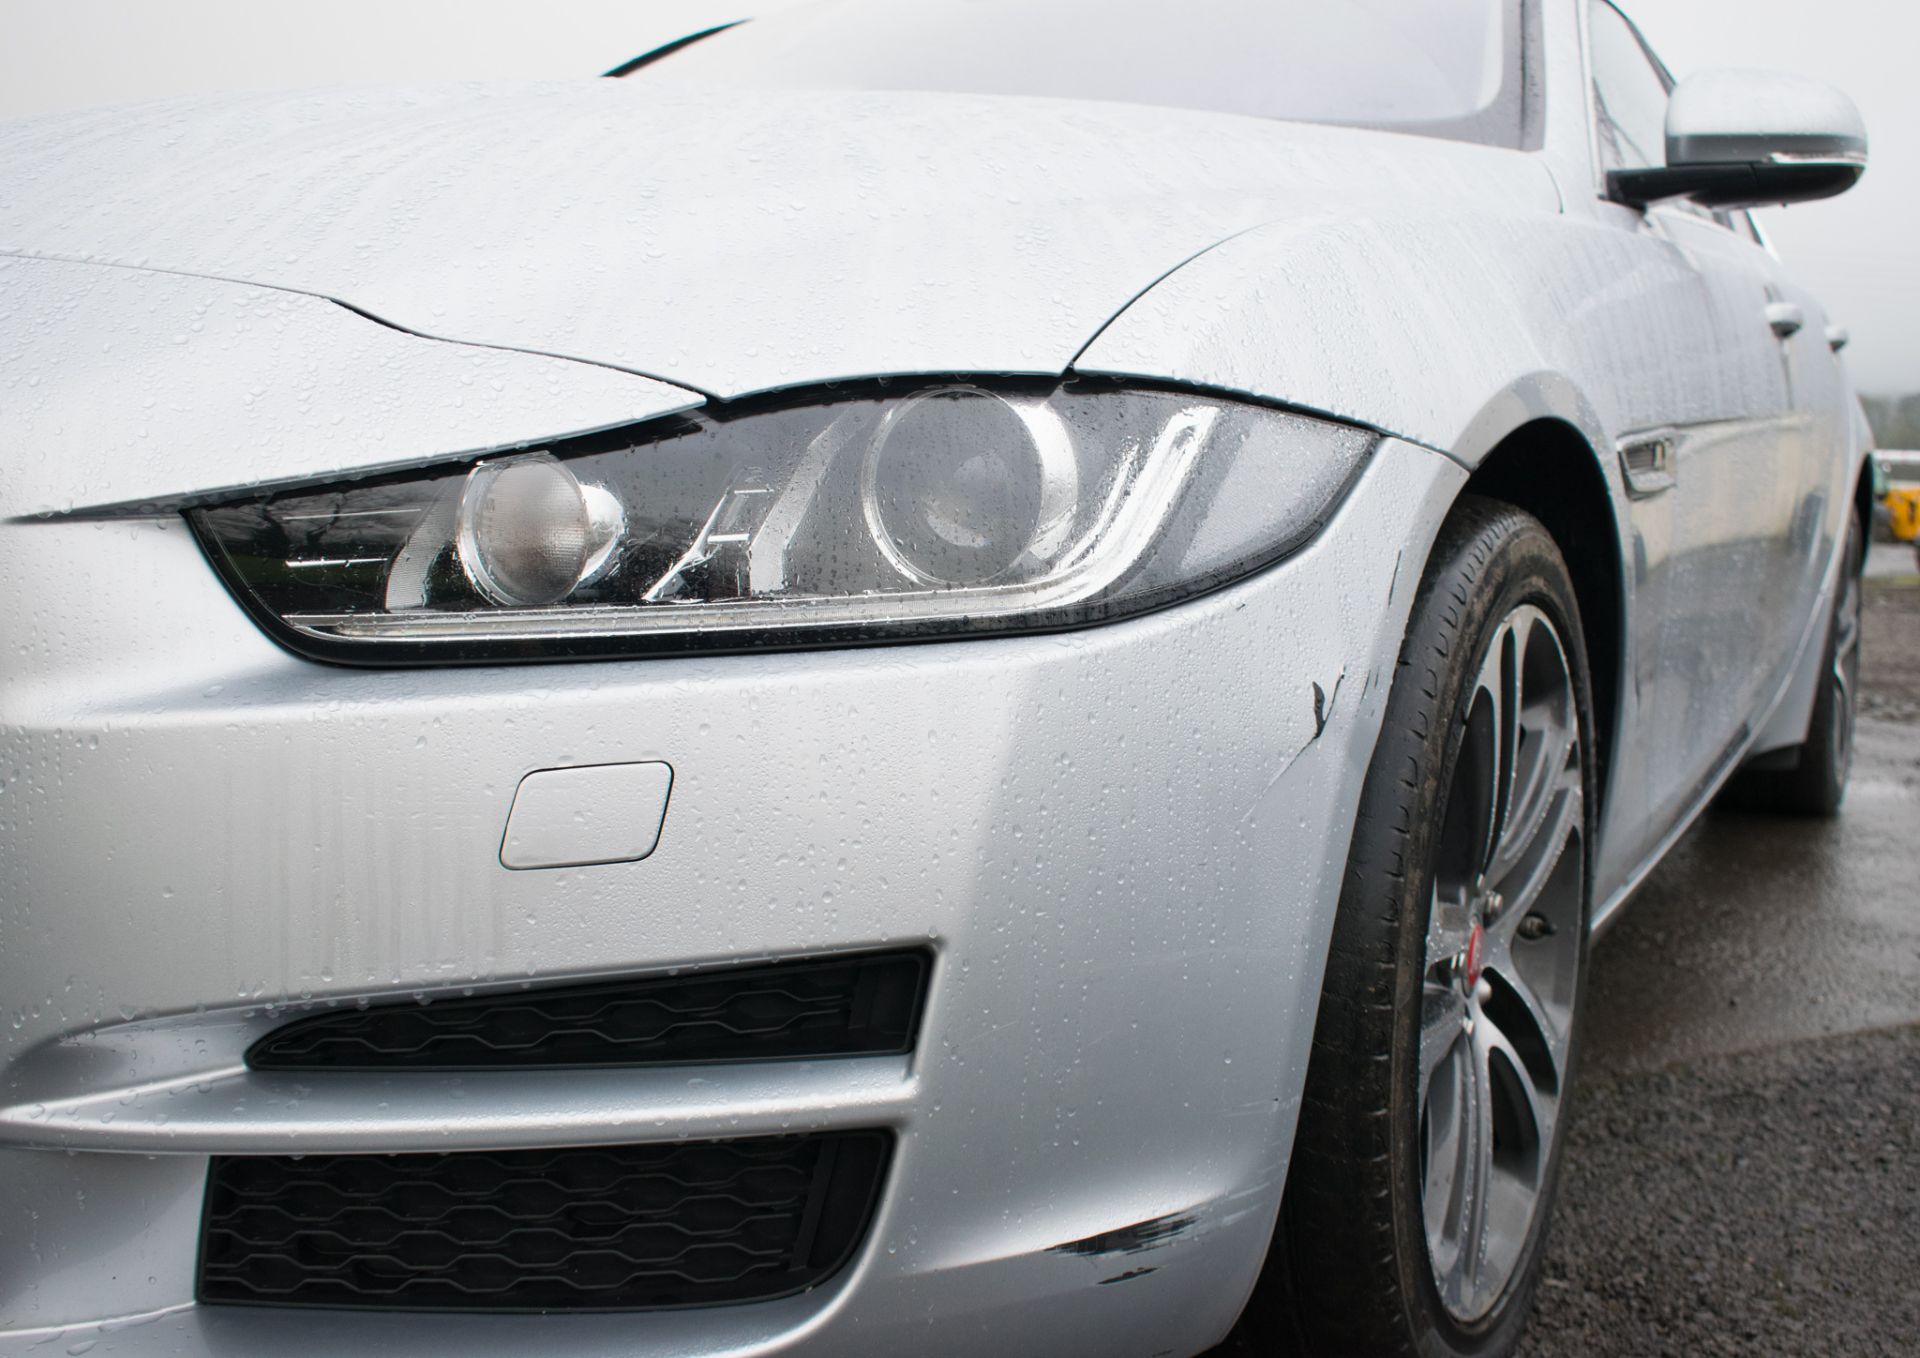 Jaguar XE Portfolio 2.0 litre petrol automatic 4 door saloon car Registration number: AV67 RPY - Image 13 of 23